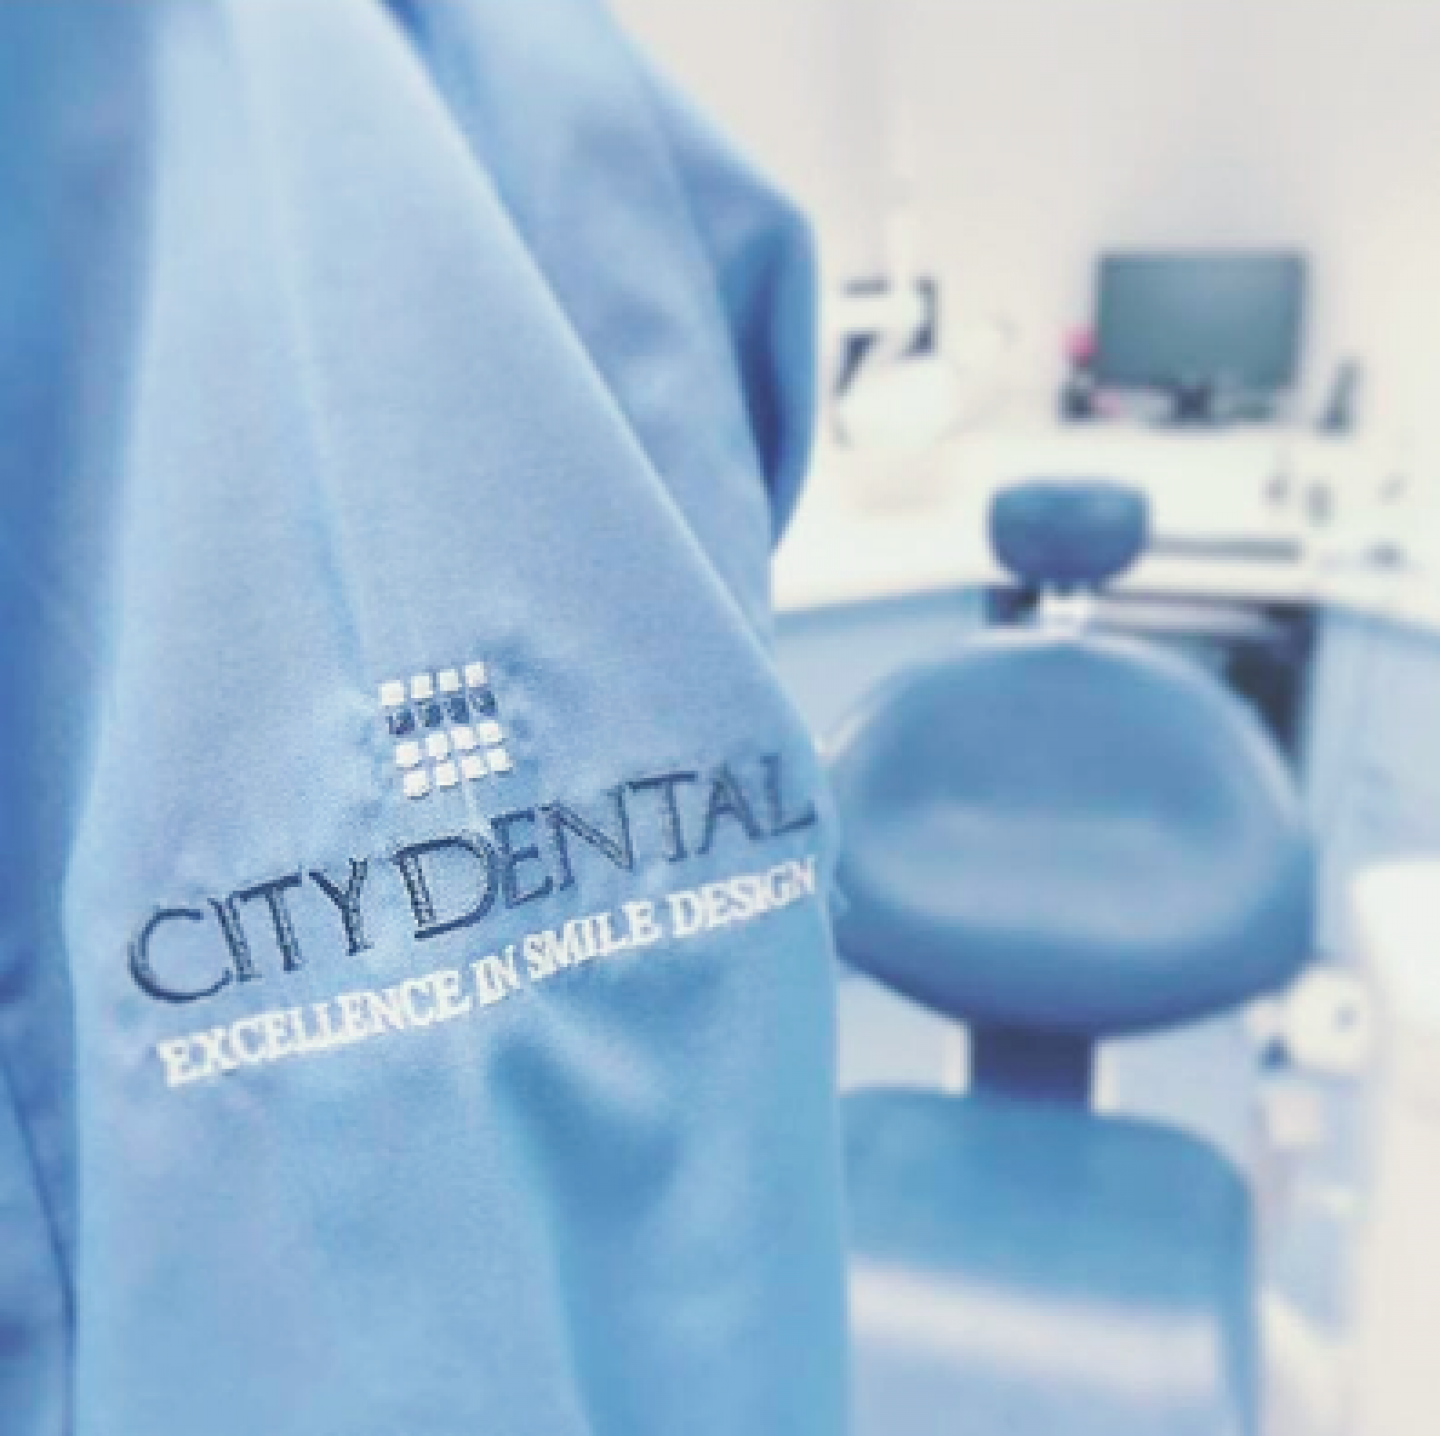 Photo of City Dentists in Sunderland logo on uniform